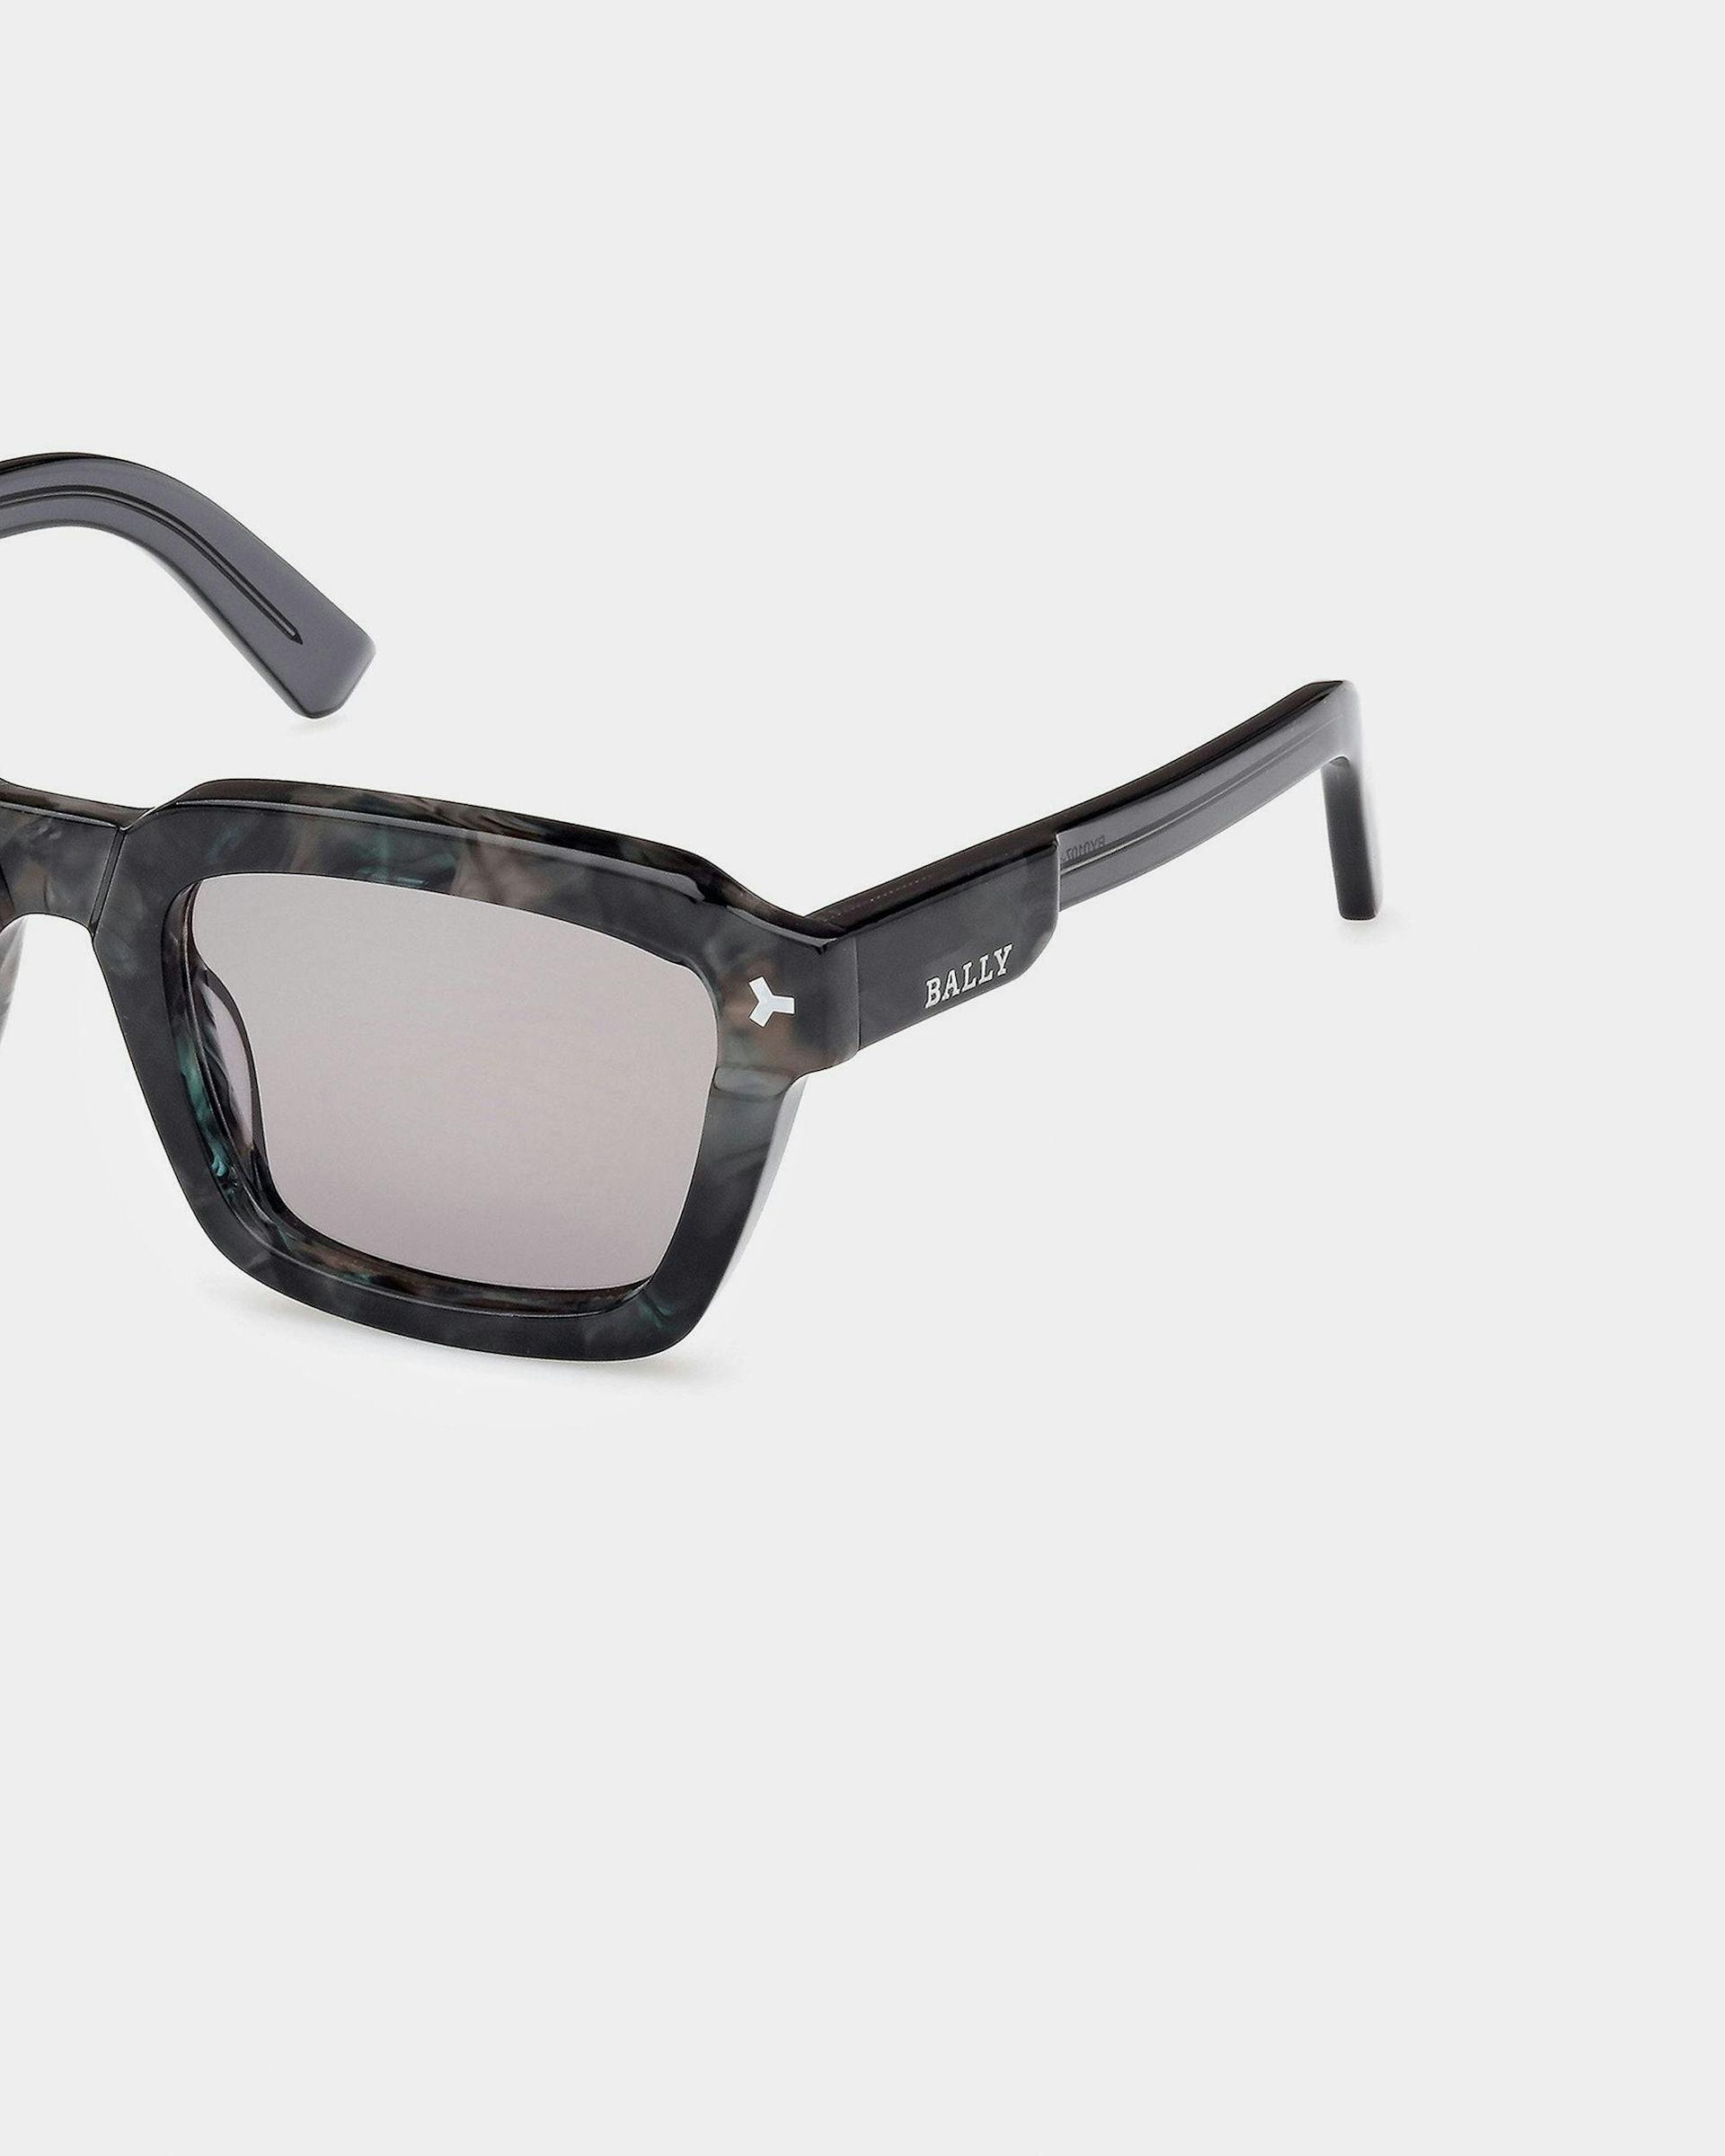 Nicholas Rectangular Full Rim Sunglasses In Black And Gray - Men's - Bally - 03